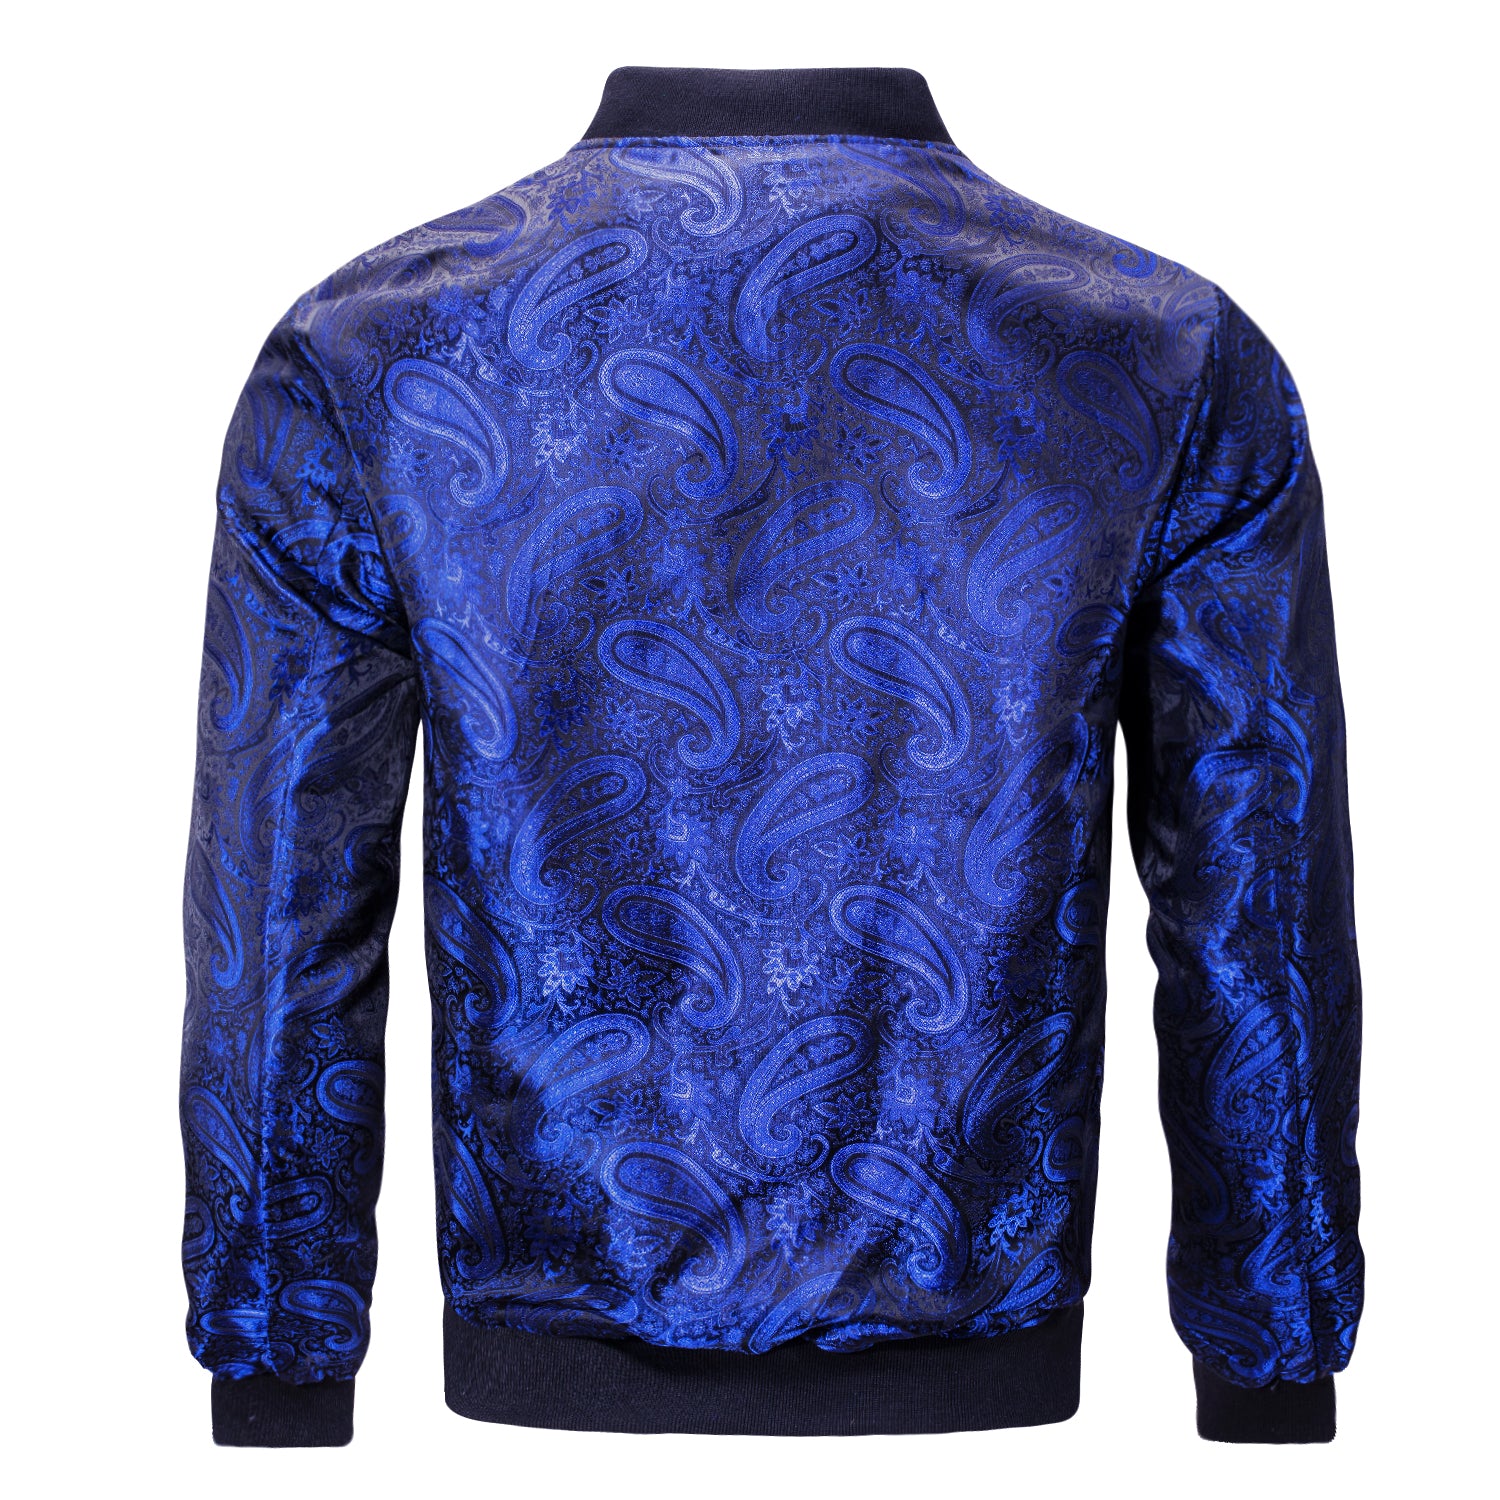 New Royal Blue Paisley Men's Urban Lightweight Zip Jacket Casual